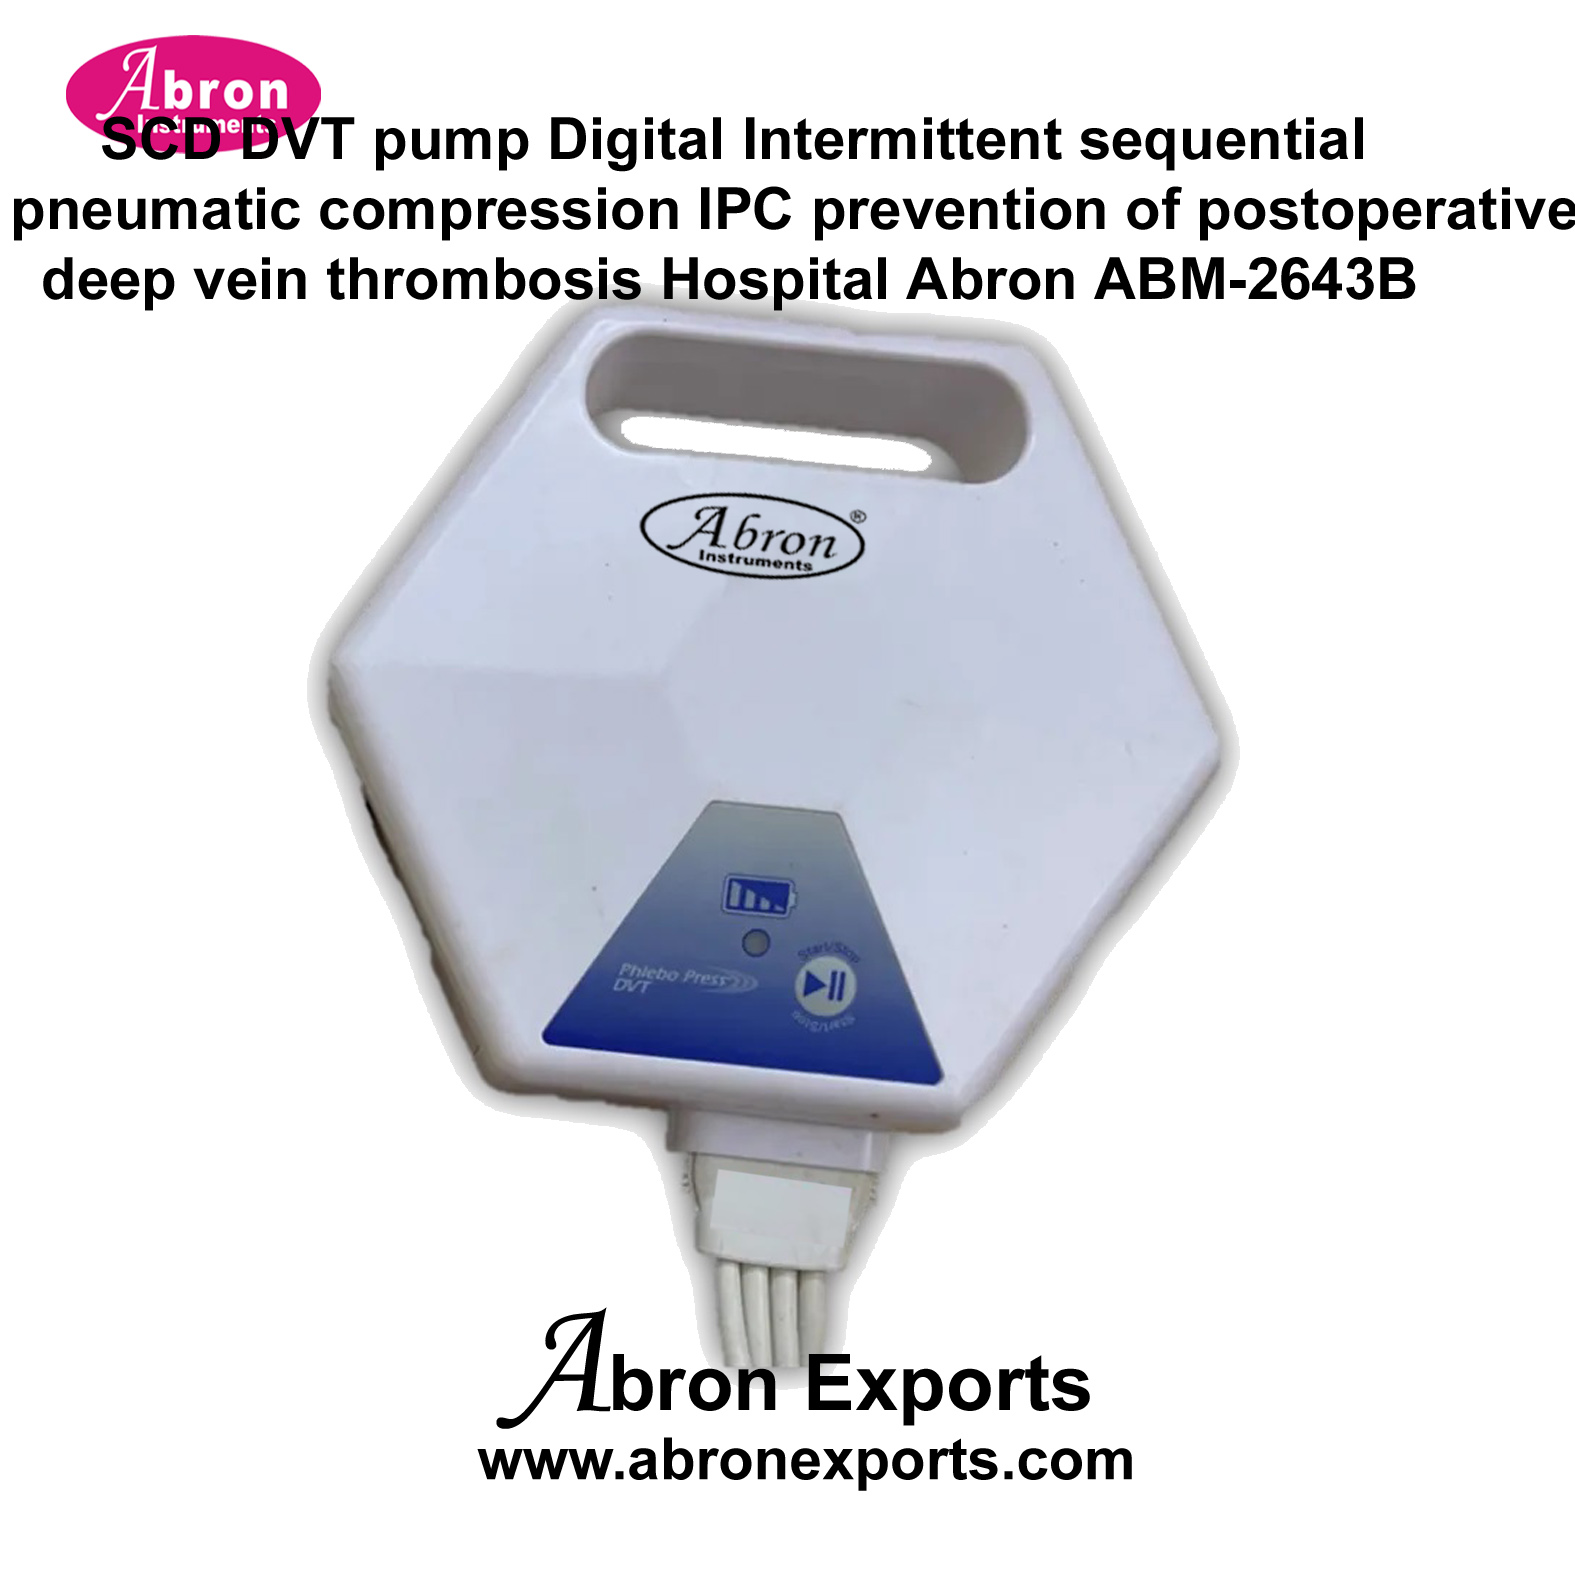 SCD DVT pump Digital Intermittent sequential pneumatic compression IPC prevention of postoperative deep vein thrombosis Hospital Abron ABM-2643B 